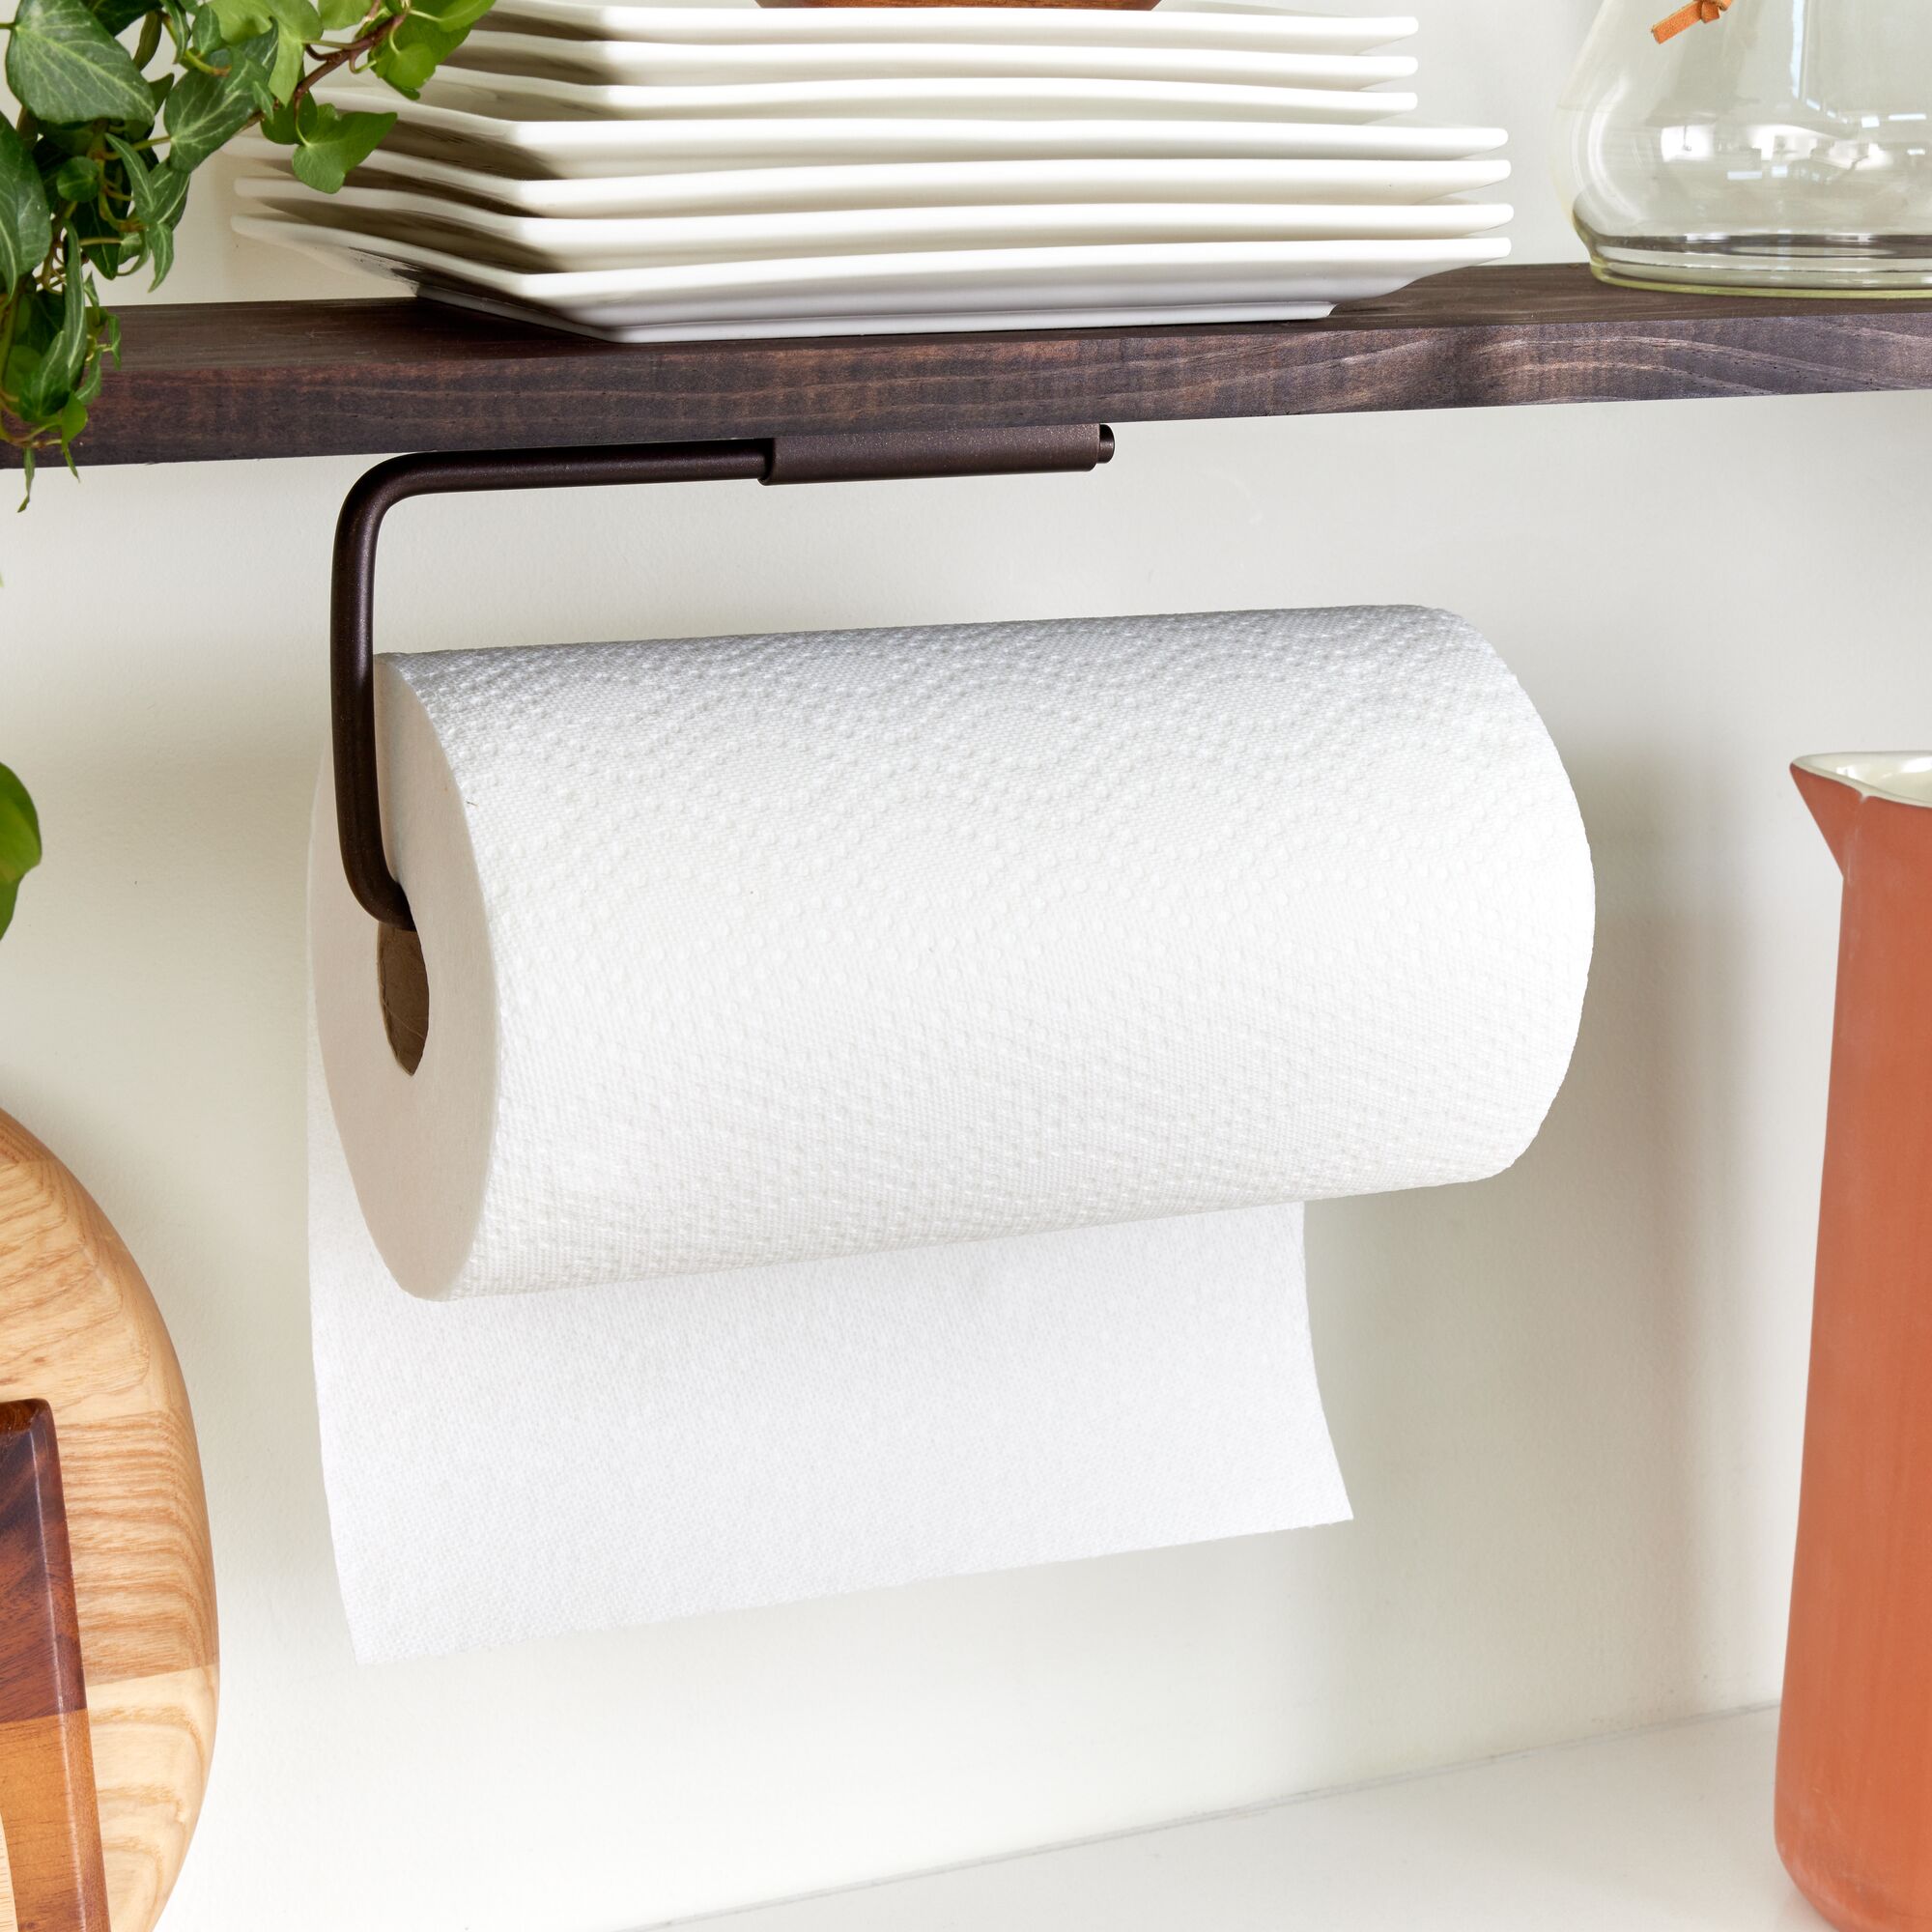 iDesign Swivel Paper Towel Holder for Kitchen, Wall Mount, Under Cabinet, Bronze - image 4 of 7